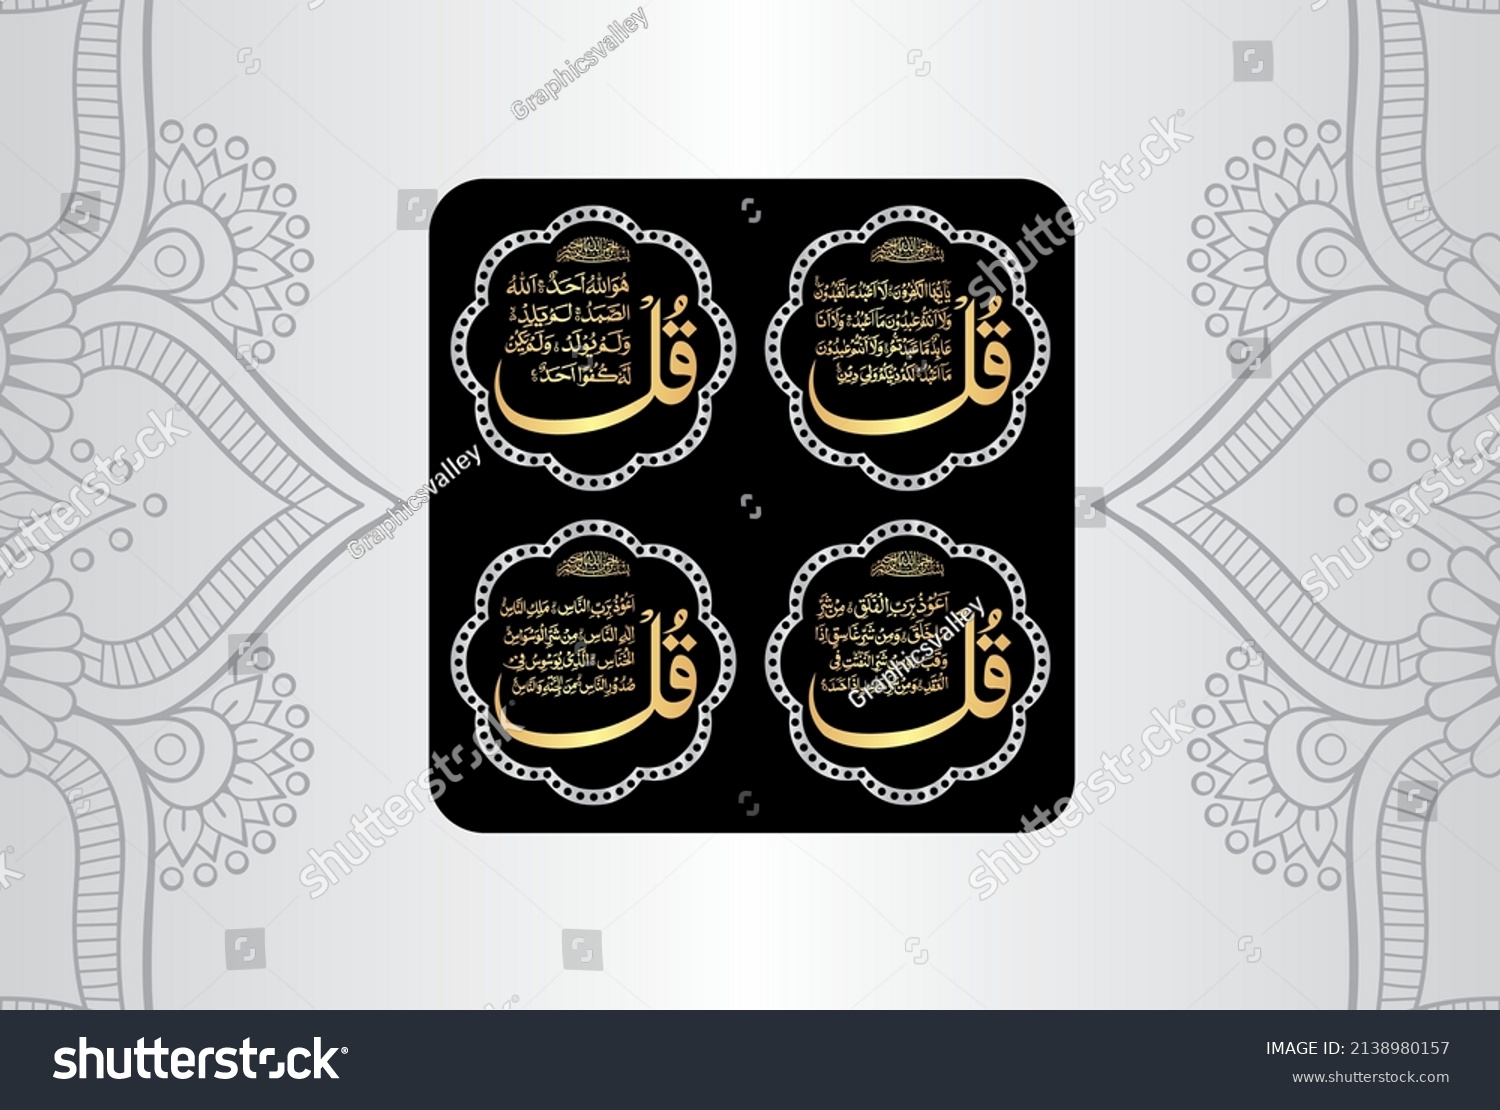 SVG of Arabic Calligraphy of 4 Qul Sharif, Surah in The Noble Quran. Al Kafirun 109, Al Ikhlas 112, Al Falaq 113, An Nas 114 svg